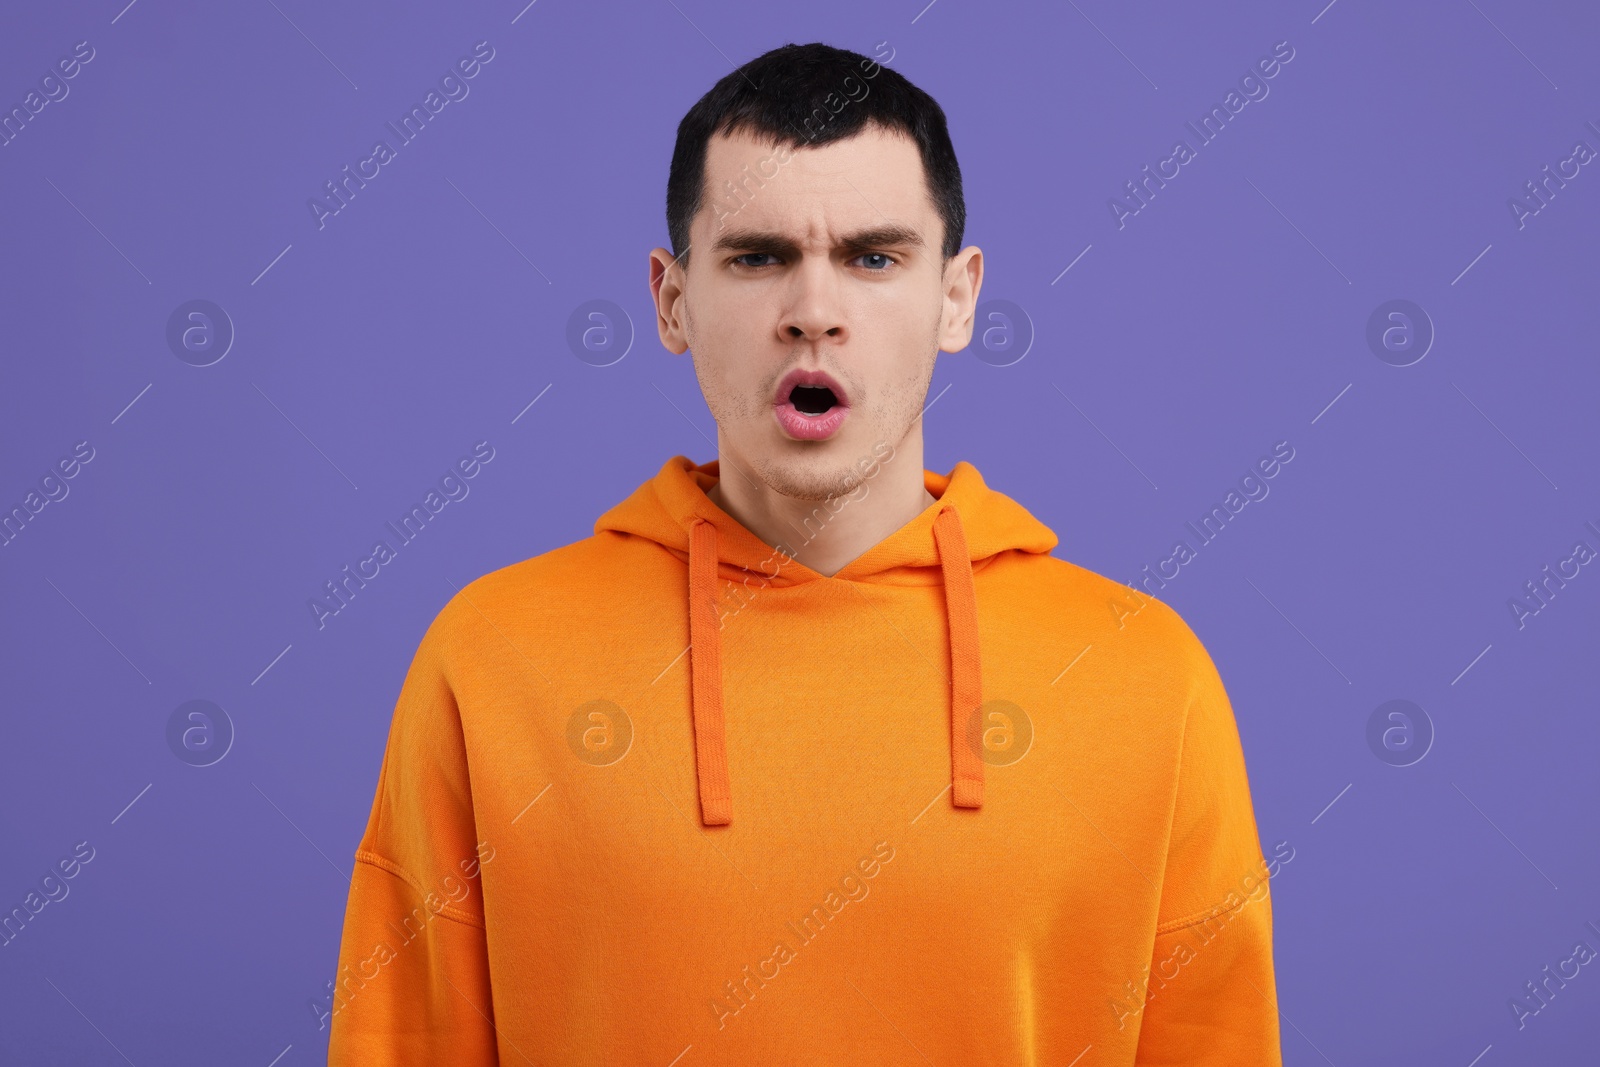 Photo of Portrait of surprised man on purple background